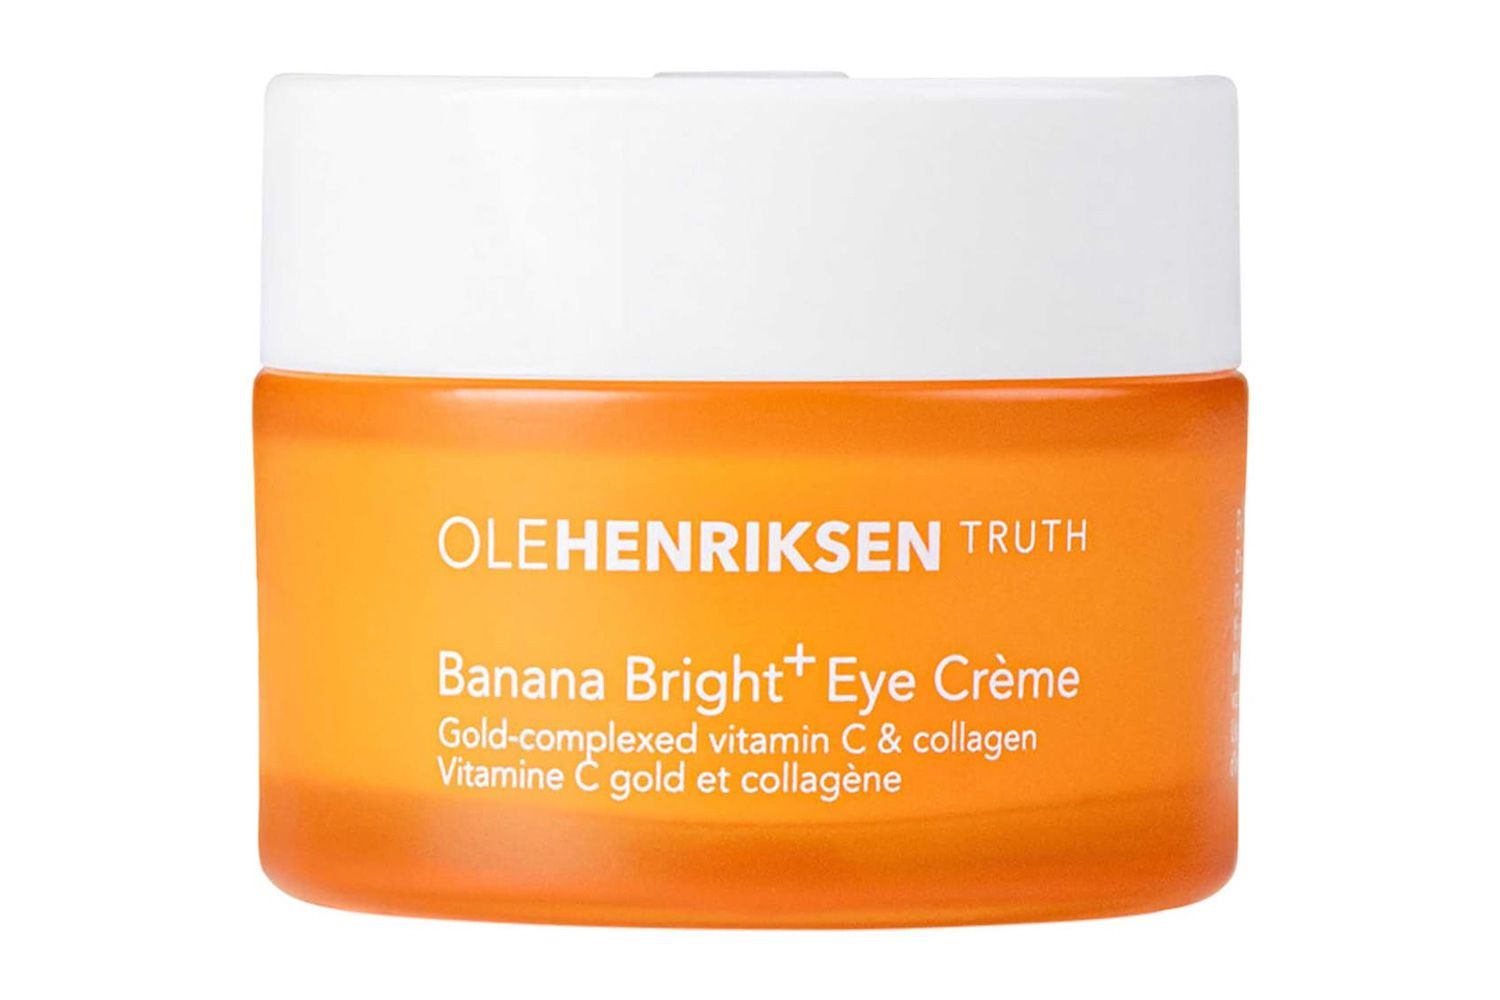 Sephora Ole Henriksen Banana Bright+ Vitamin C Eye Creme